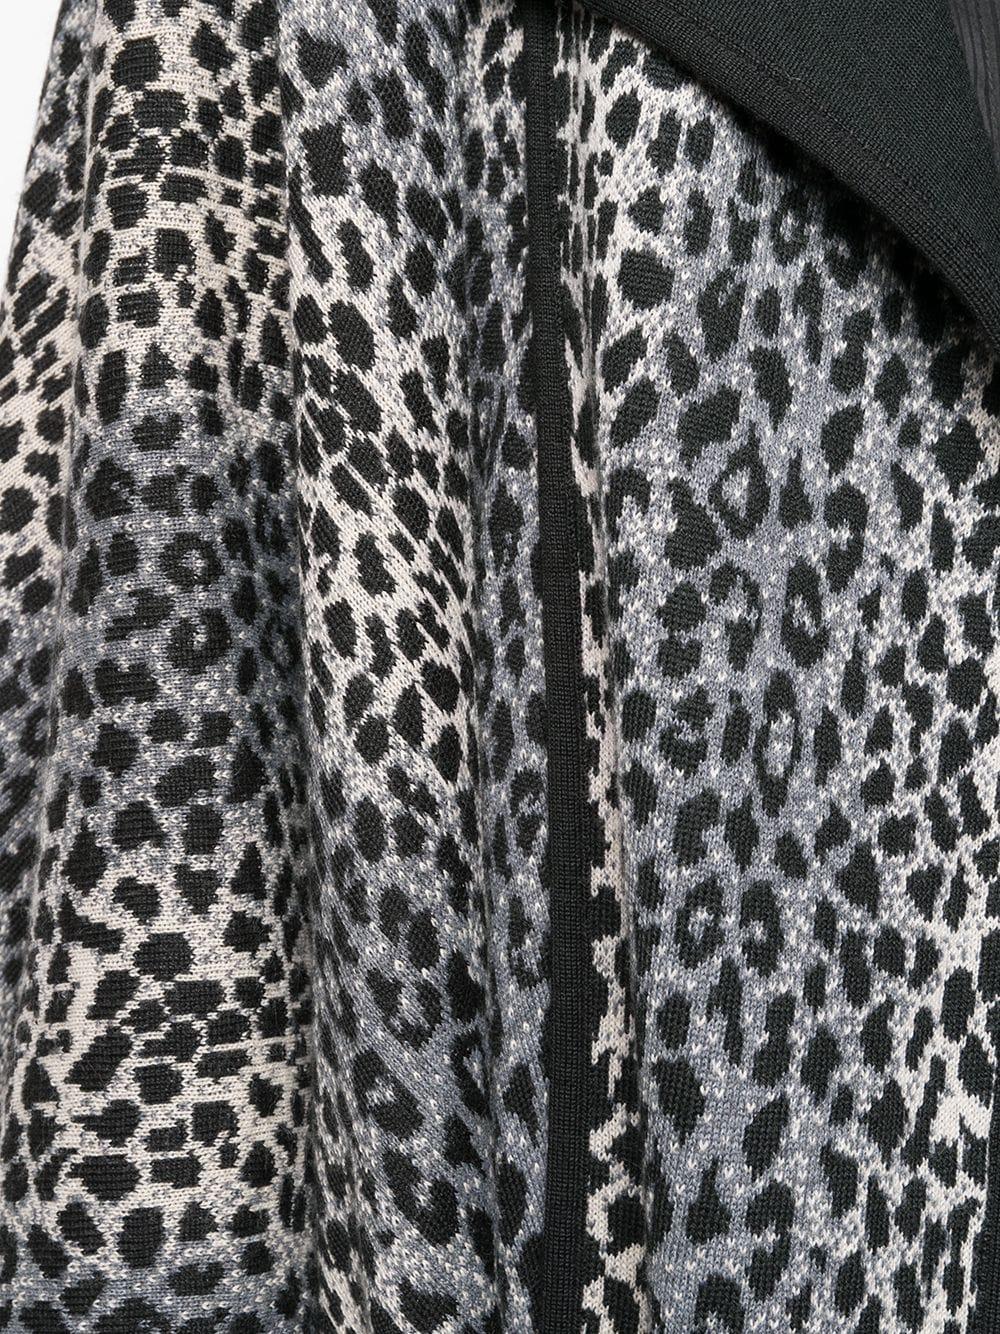 Women's 1980s Yves Saint Laurent Animal Print Cape